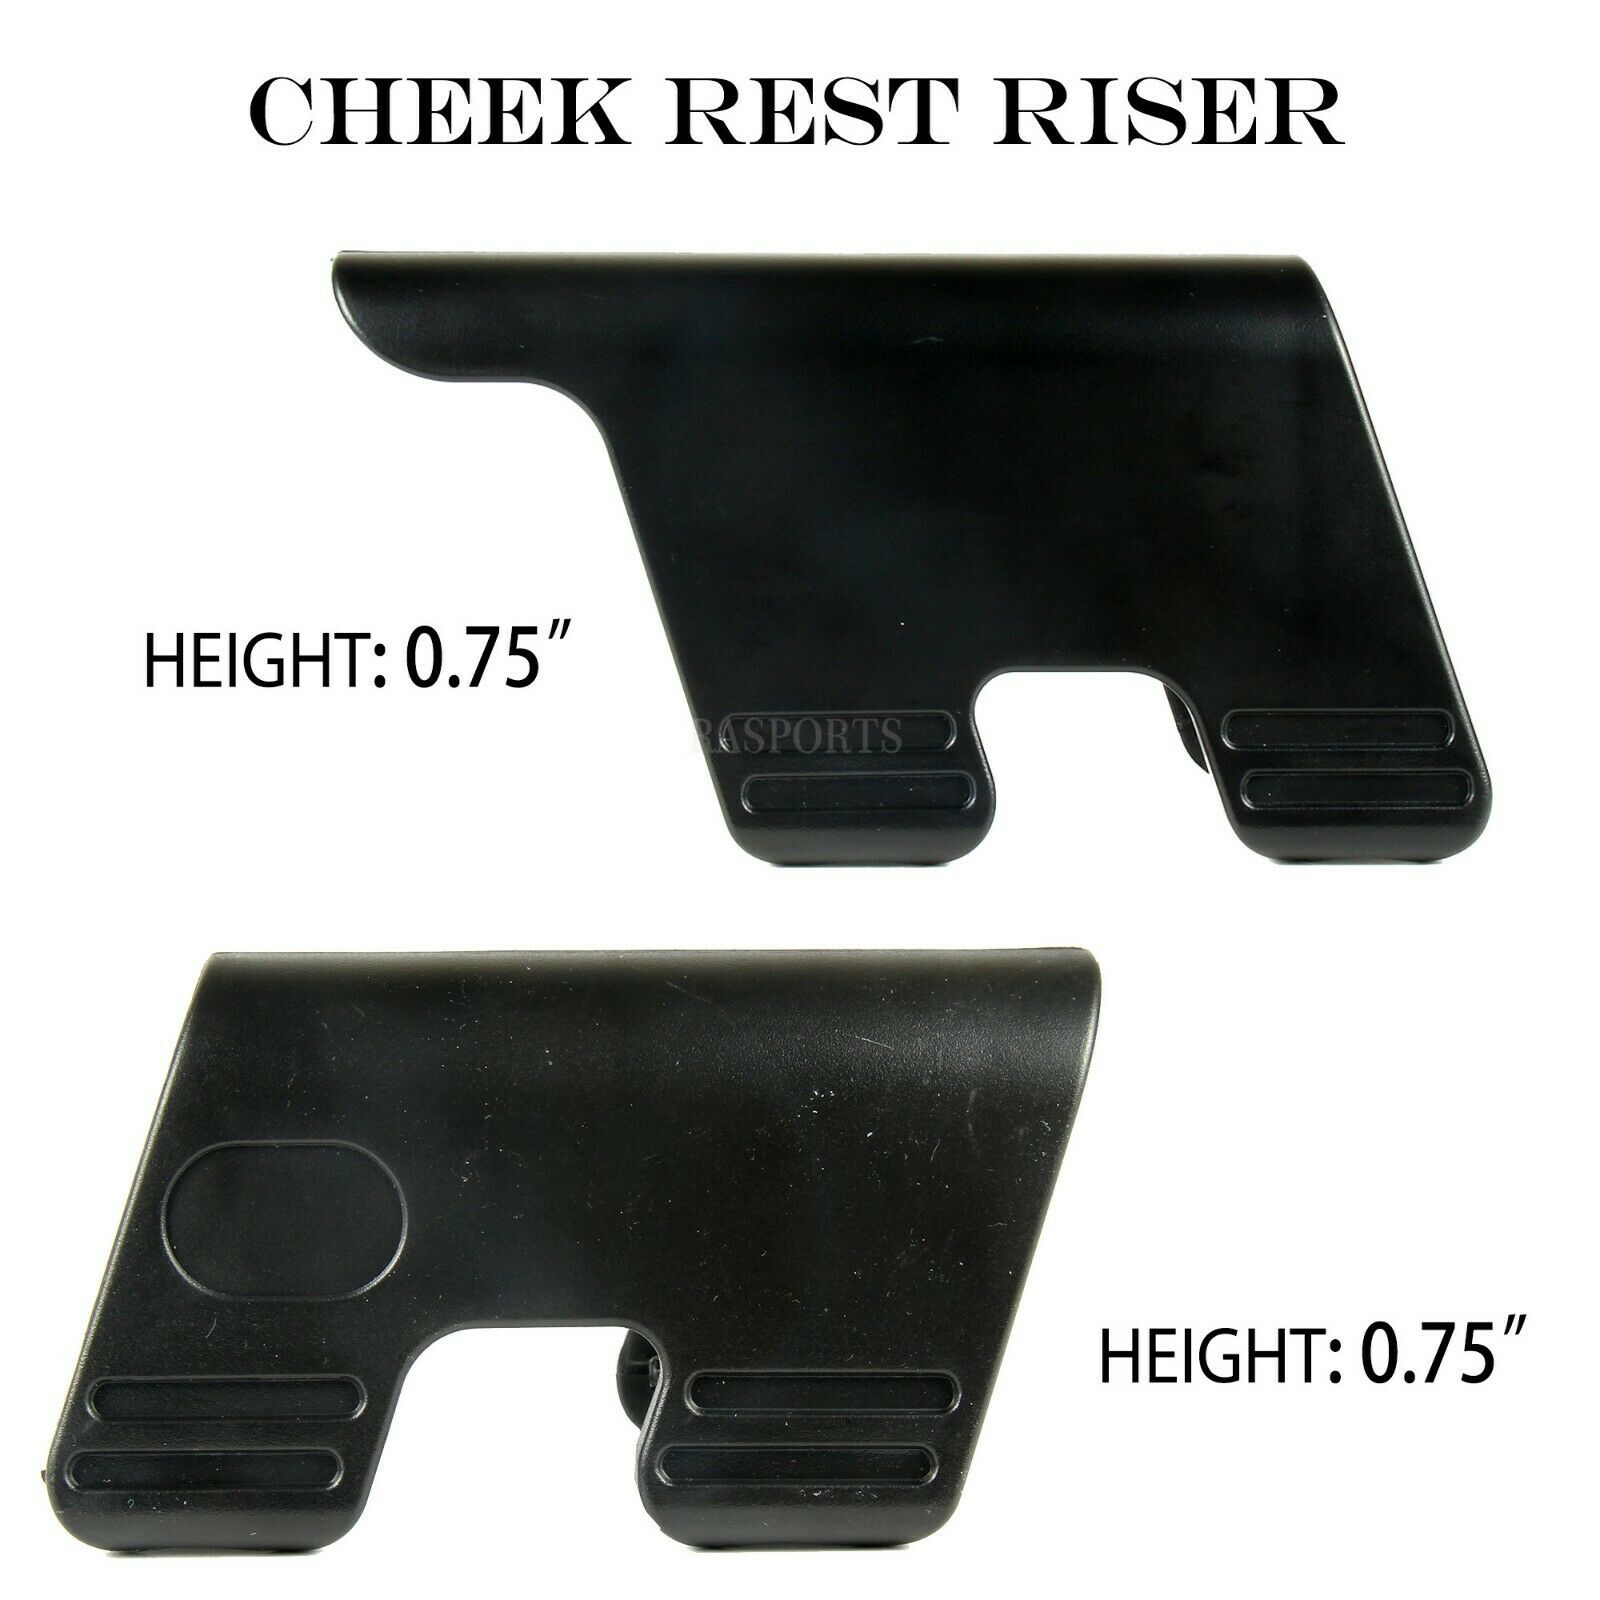 Tactical Cheek Rest Riser For Buttstock - Hight 1.25" Or 0.75"